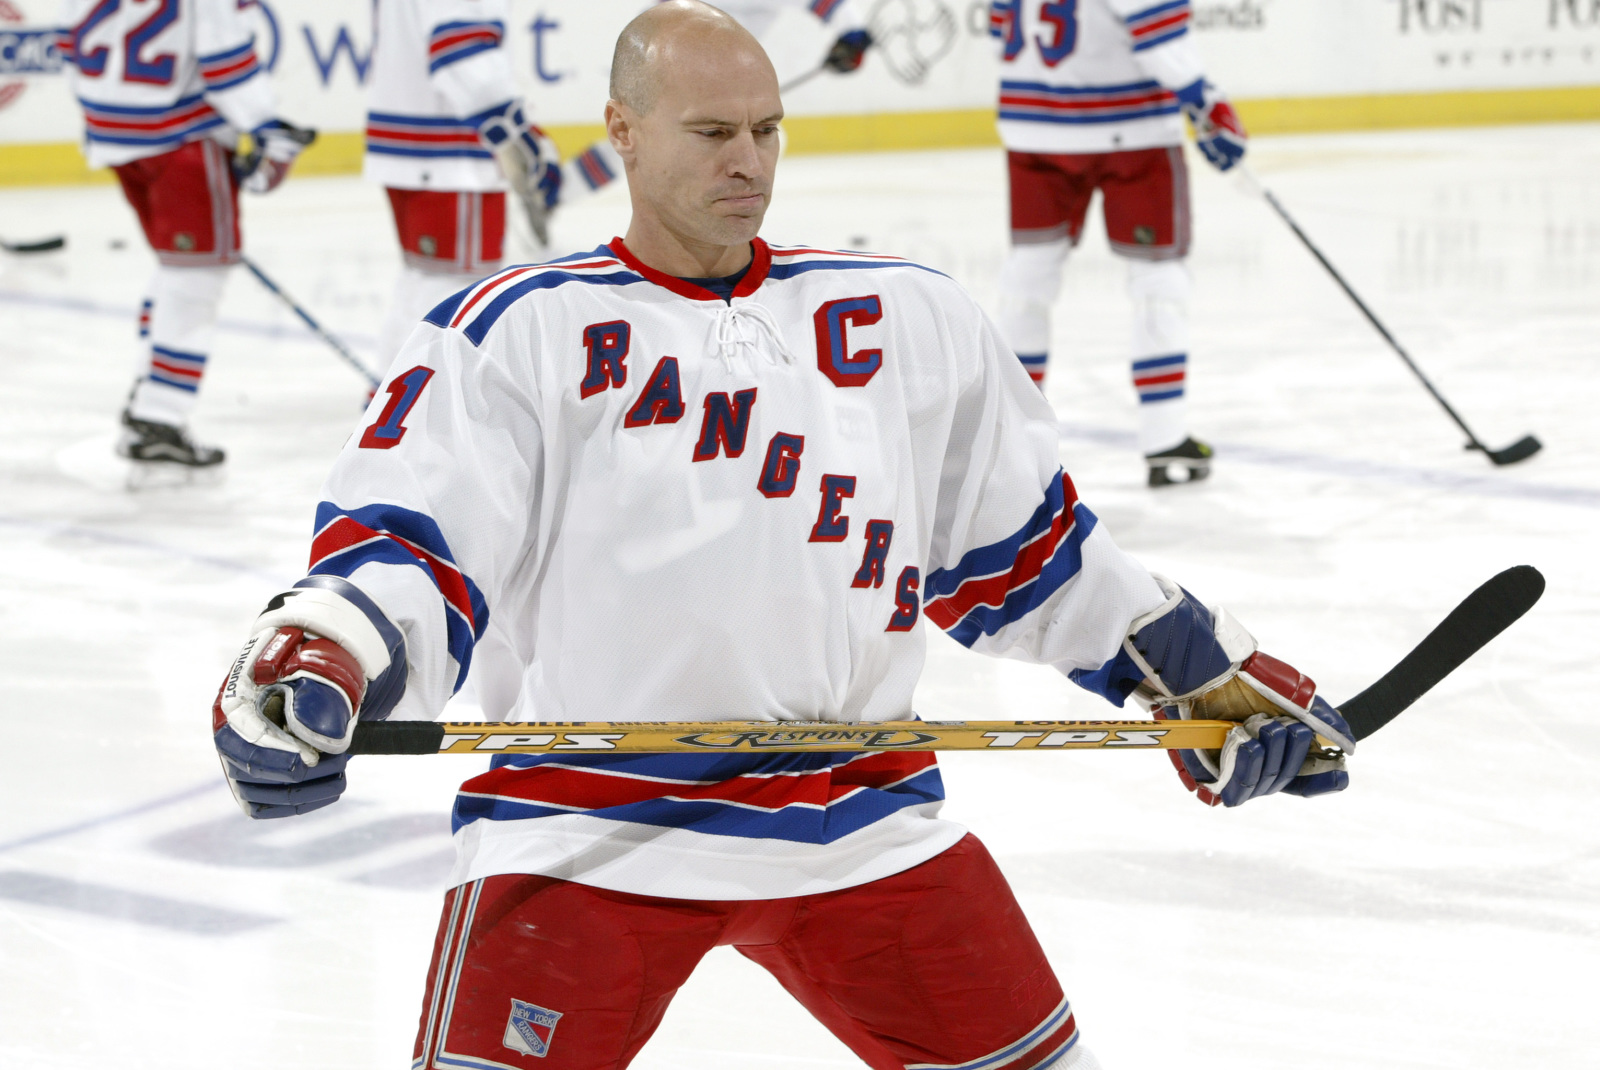 1993-94 Mark Messier Game Worn New York Rangers Jersey. Hockey